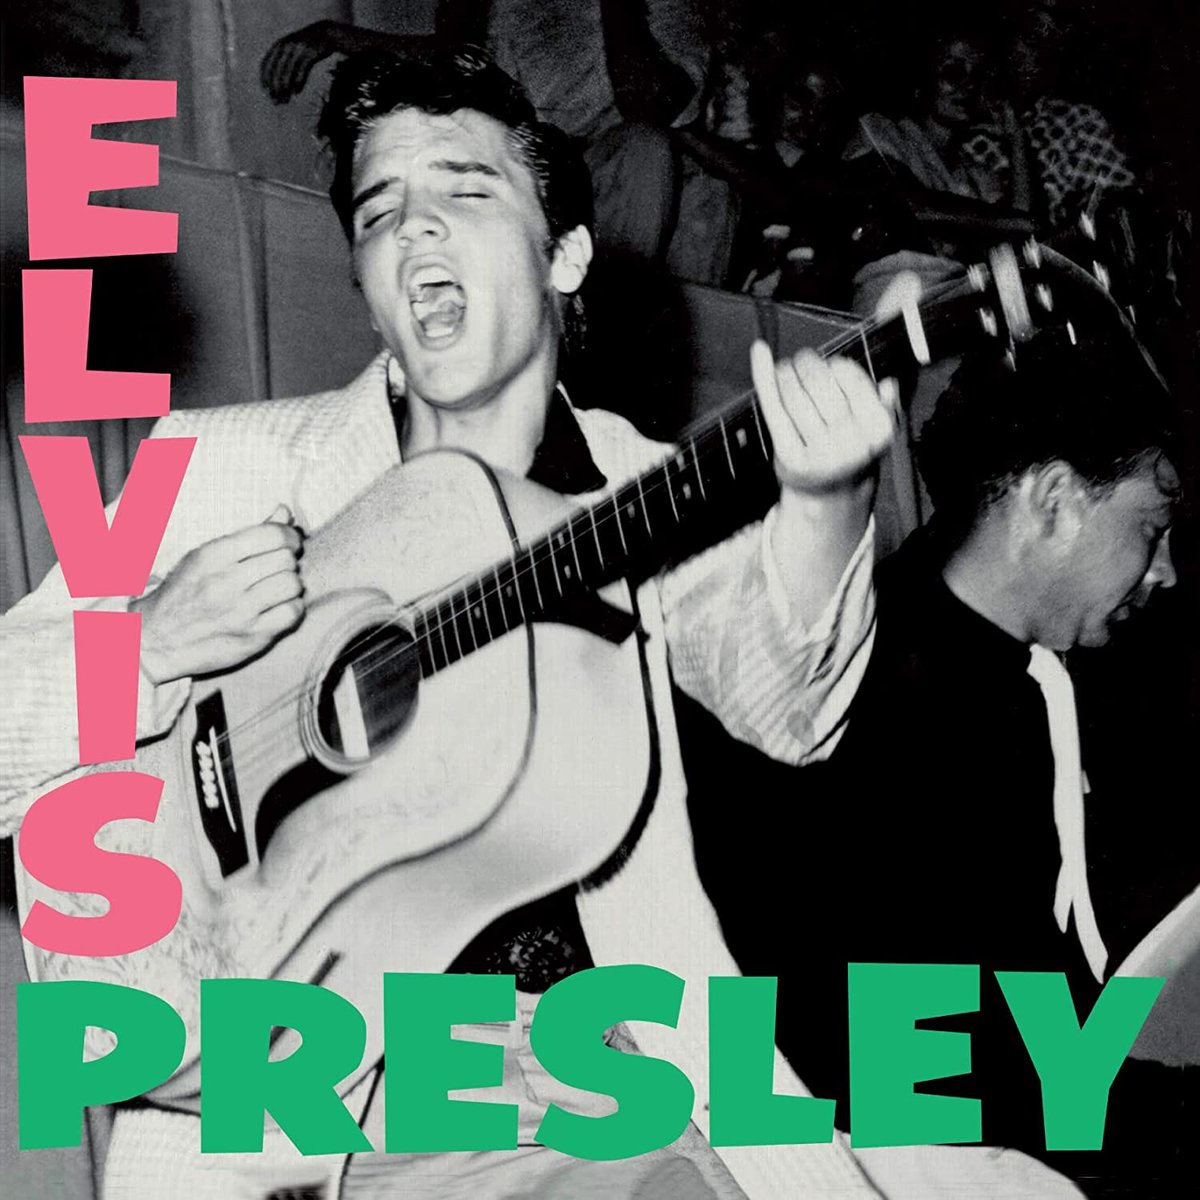 Elvis Presley - elvis, элвис, album cover, элвис пресли, обложка альбома - оригинал